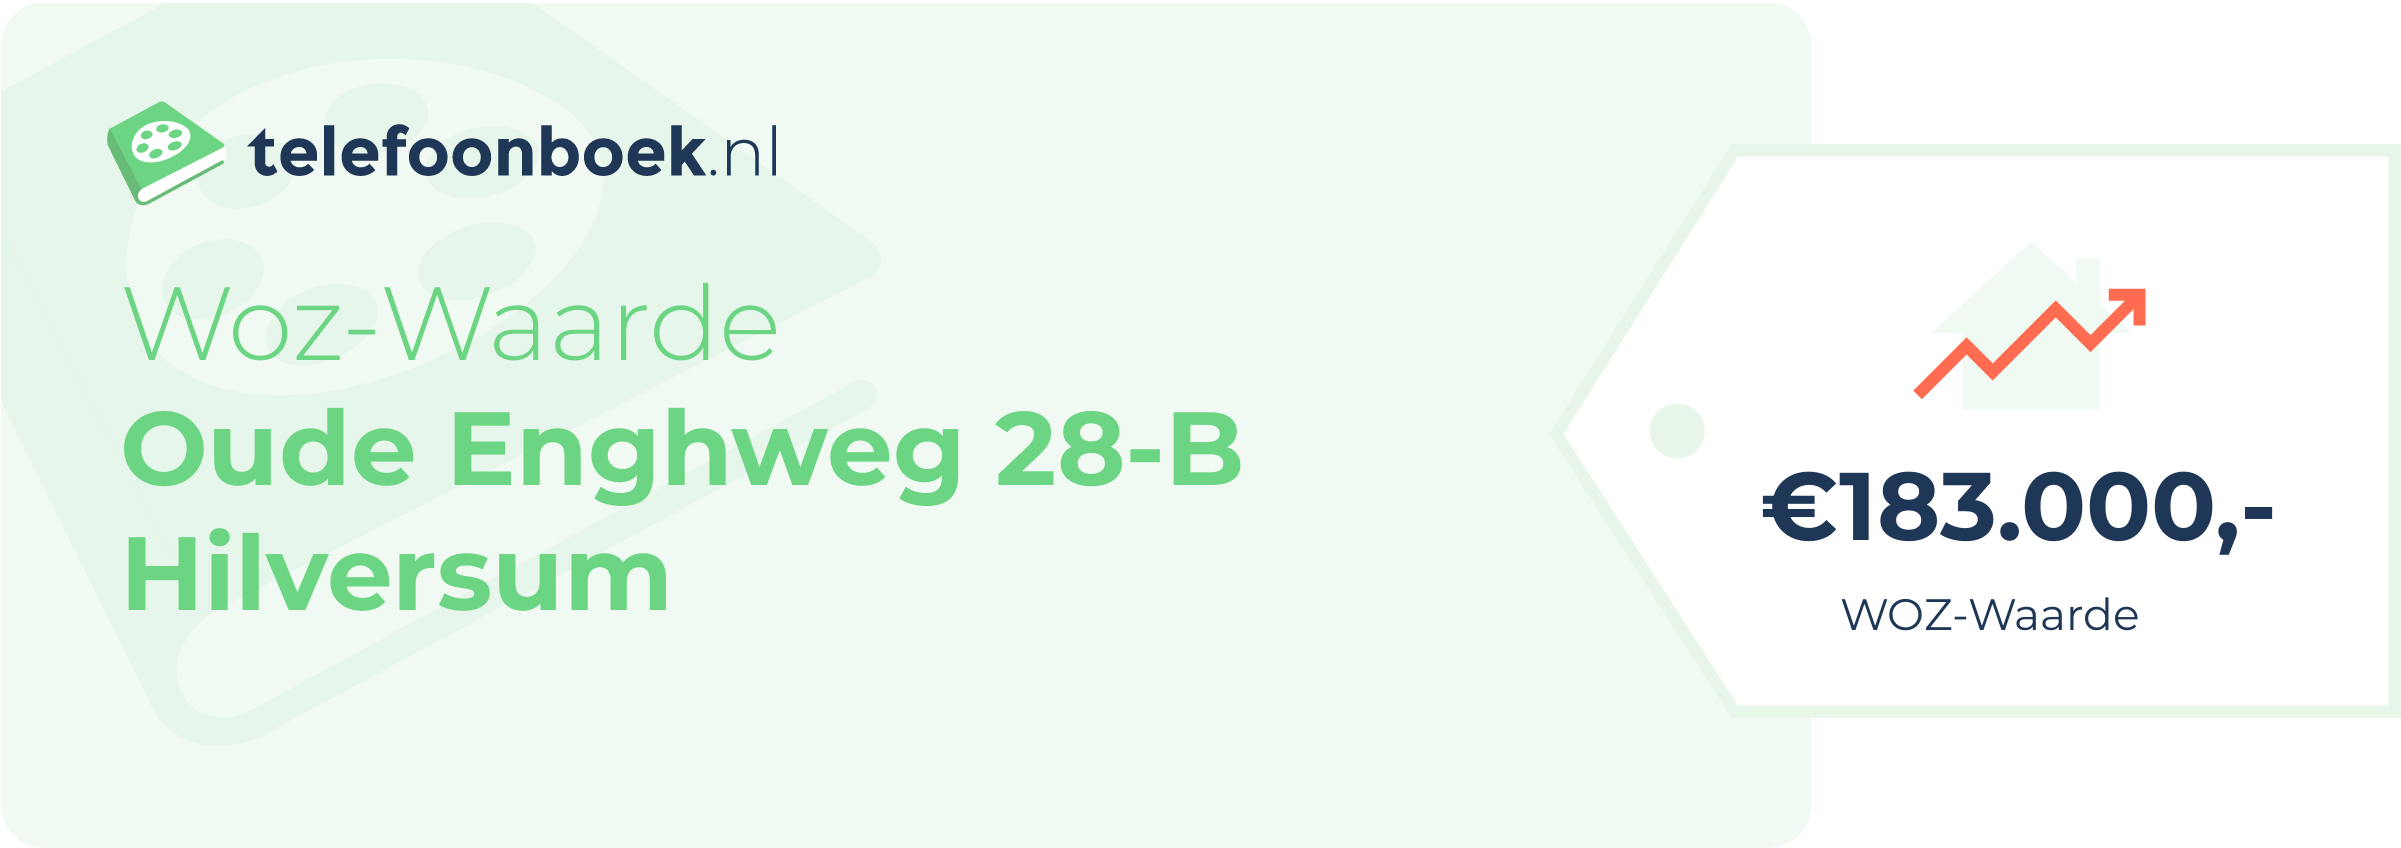 WOZ-waarde Oude Enghweg 28-B Hilversum